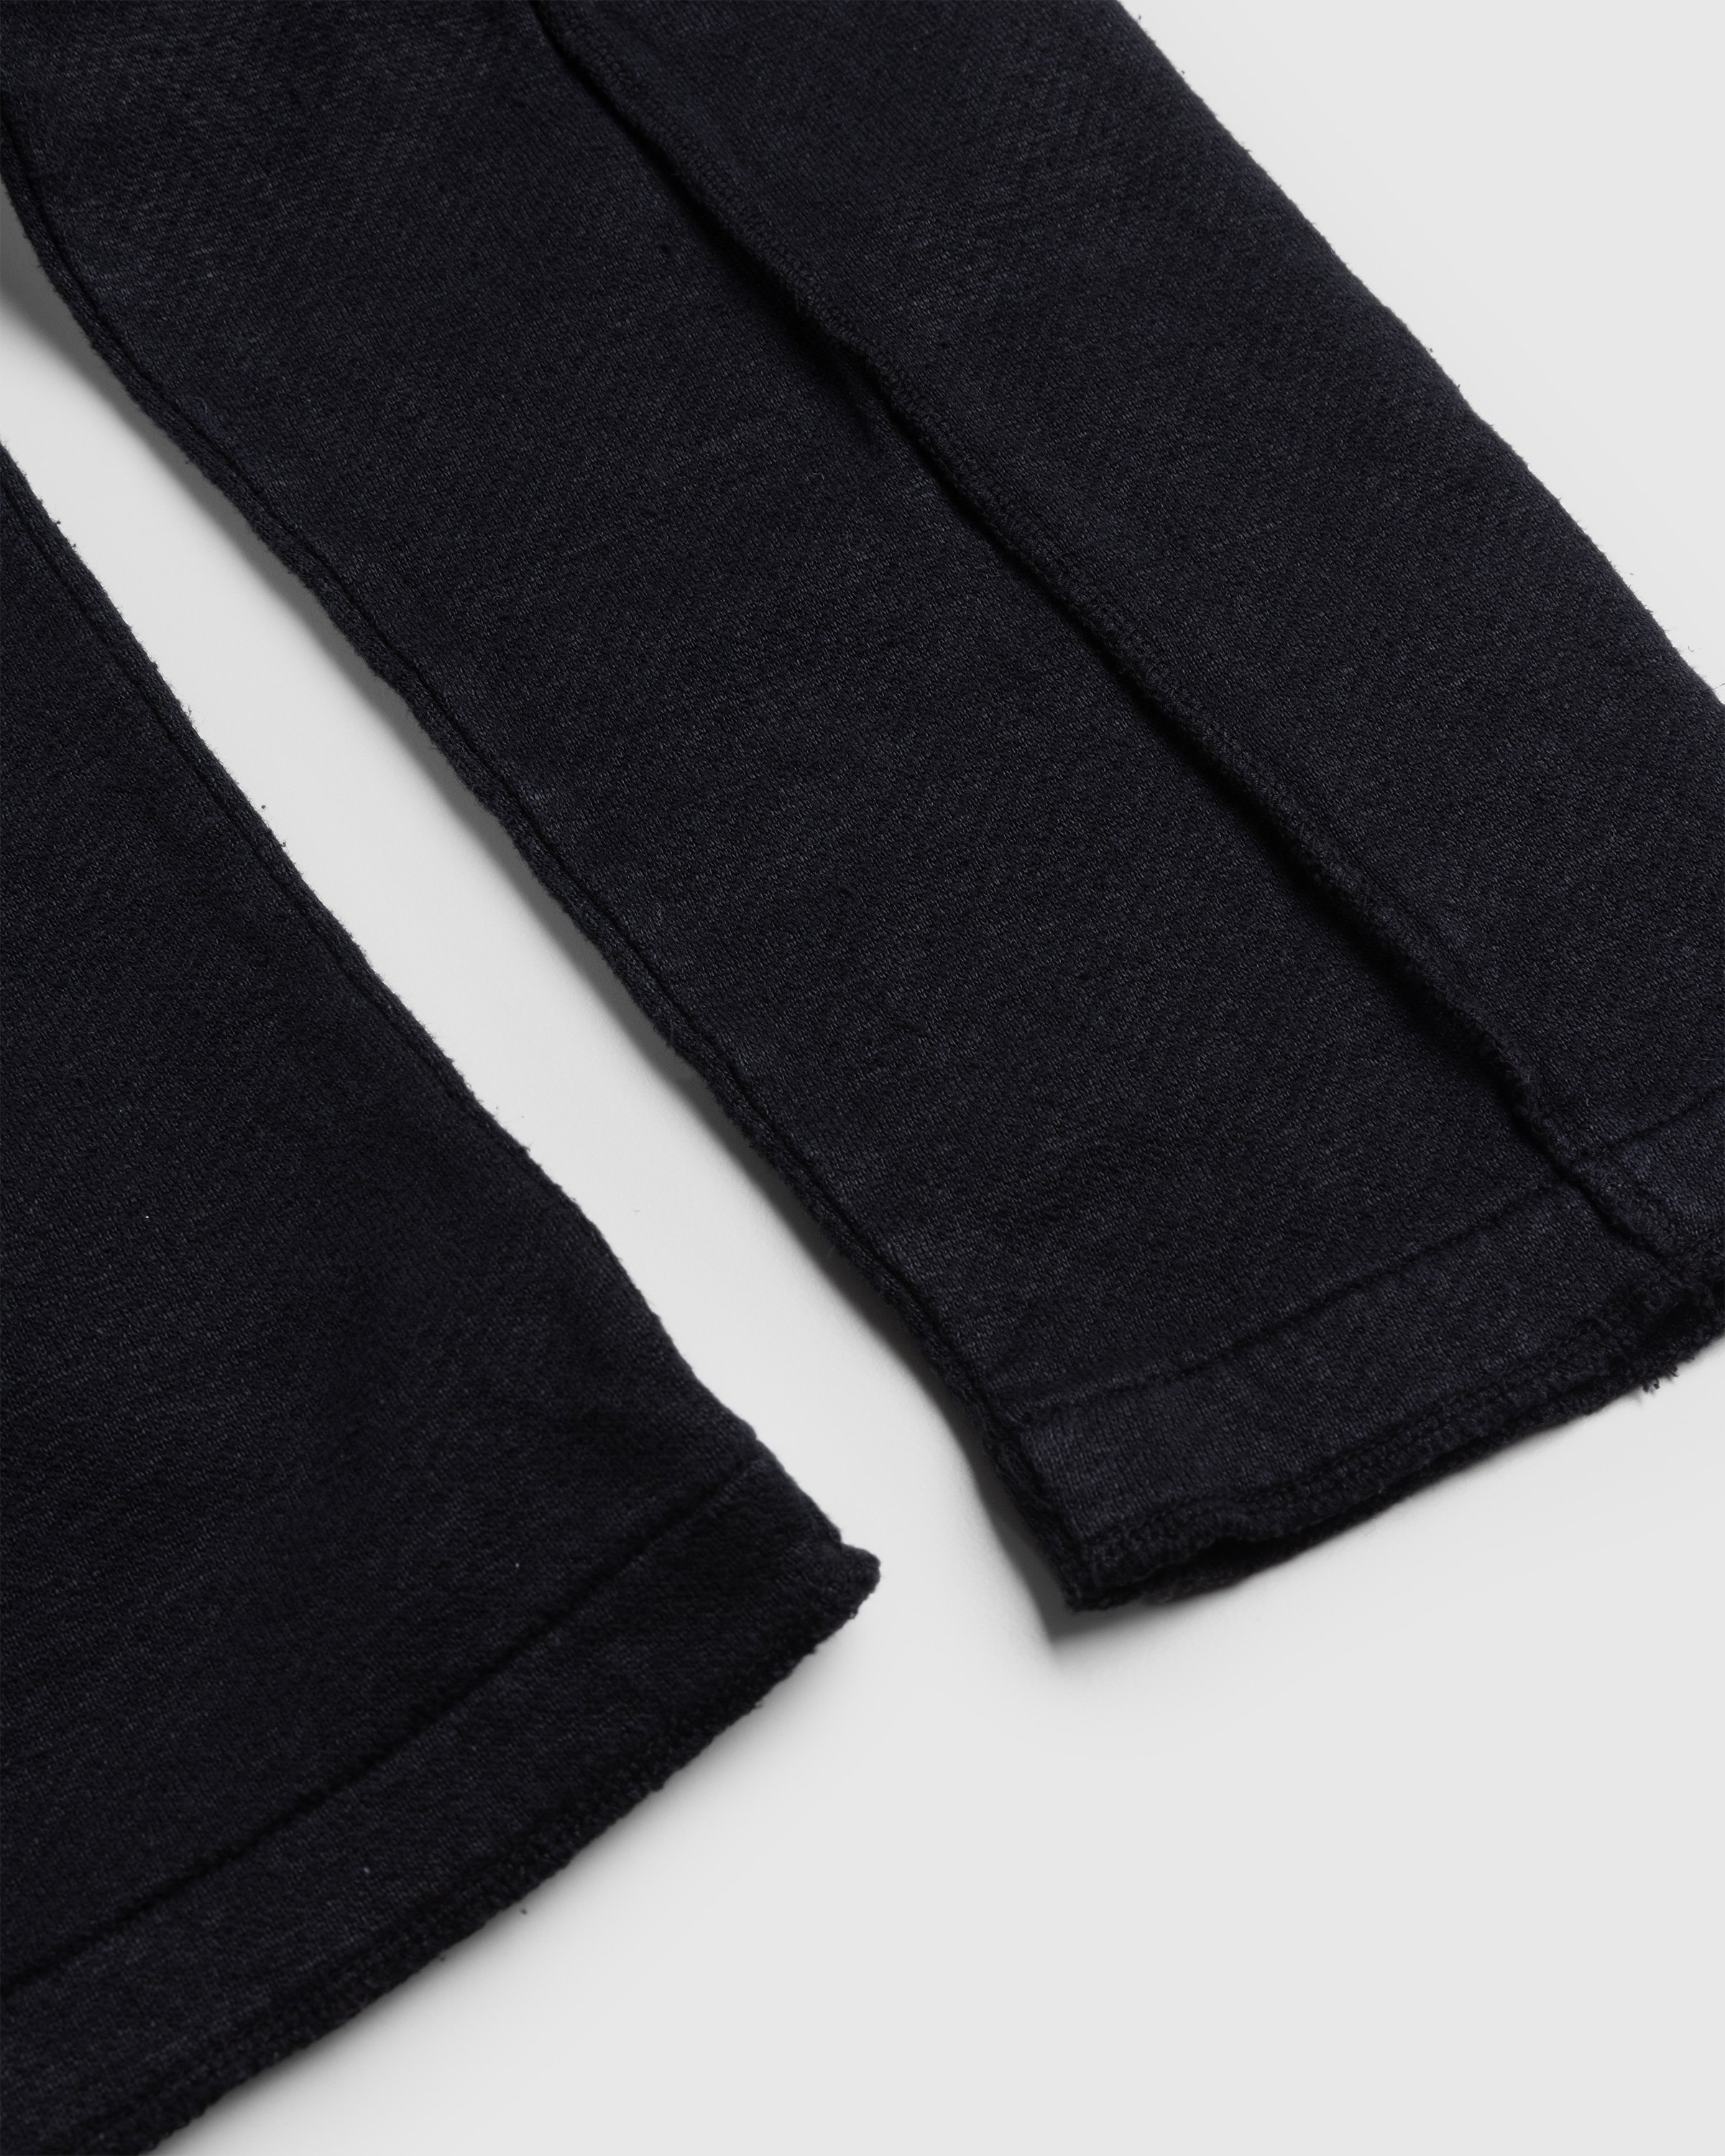 Our Legacy - Inverted Sweatshirt Black Hemp Loopback - Clothing - Black - Image 5